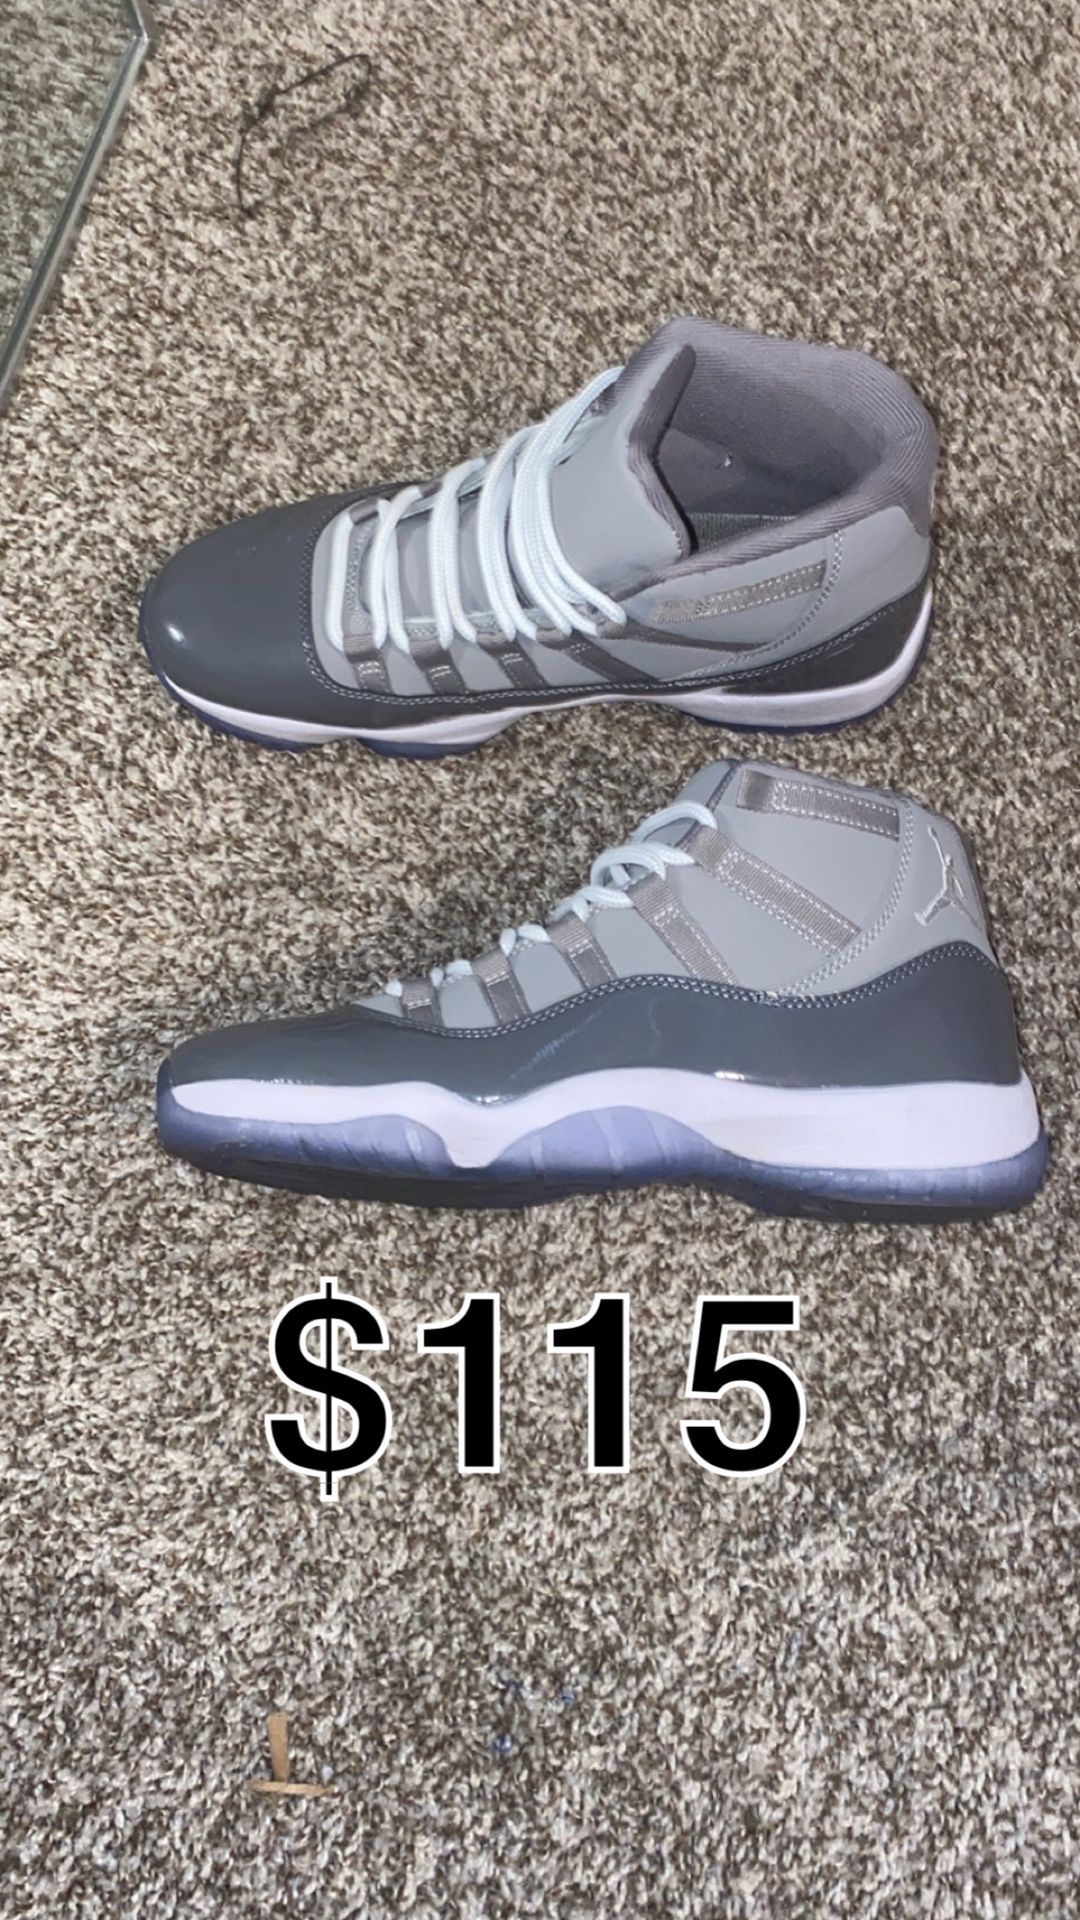 $115 Jordan 11 Cool Greys 